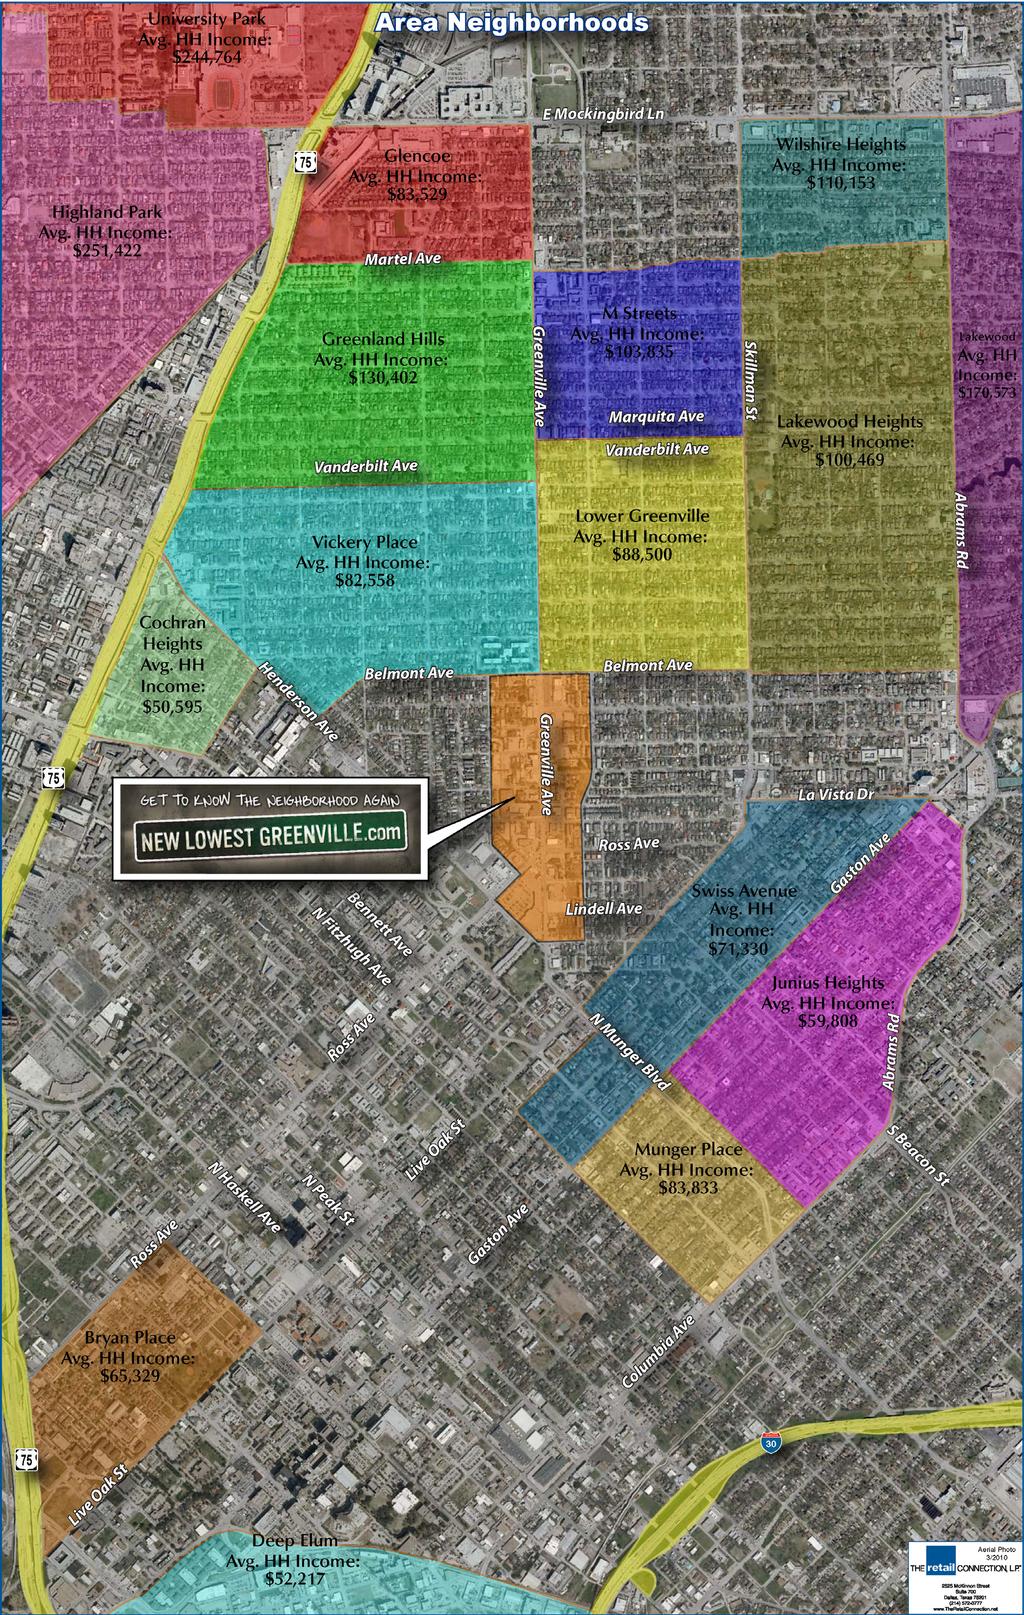 Area Neighborhoods Surrounding neighborhood made up primarily of owner occupied single-housing family, yet also